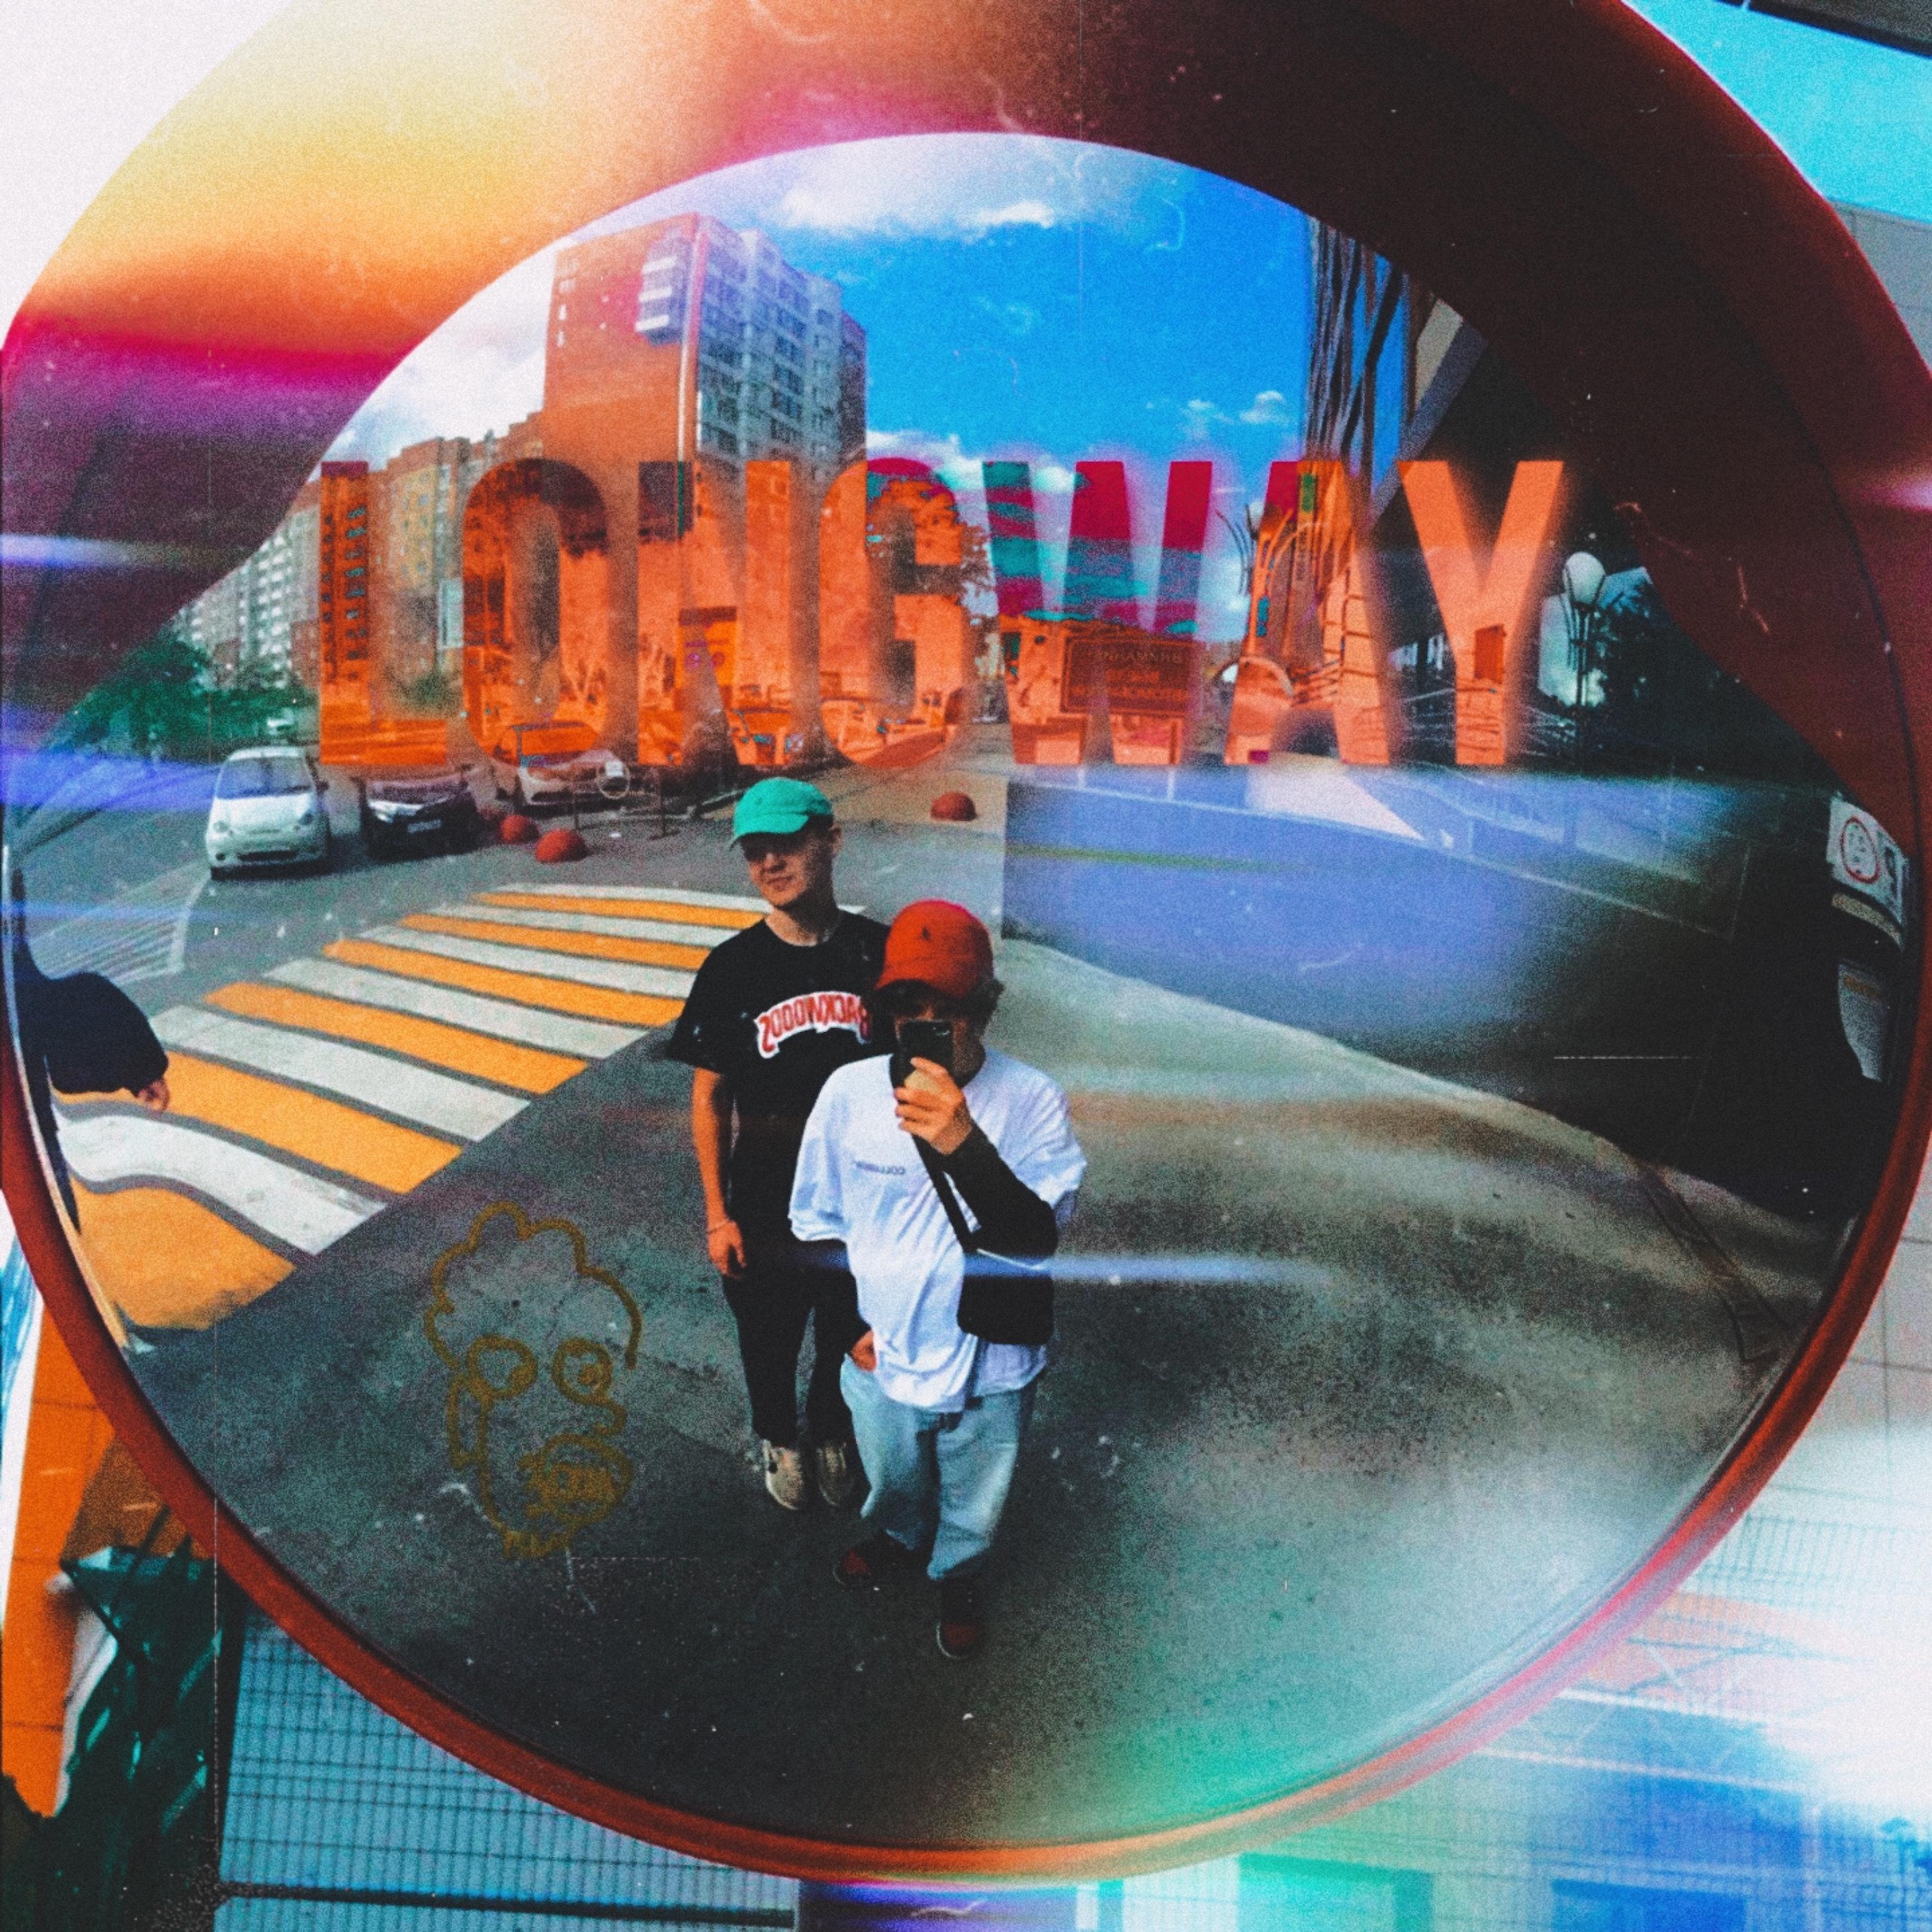 Постер альбома Longway